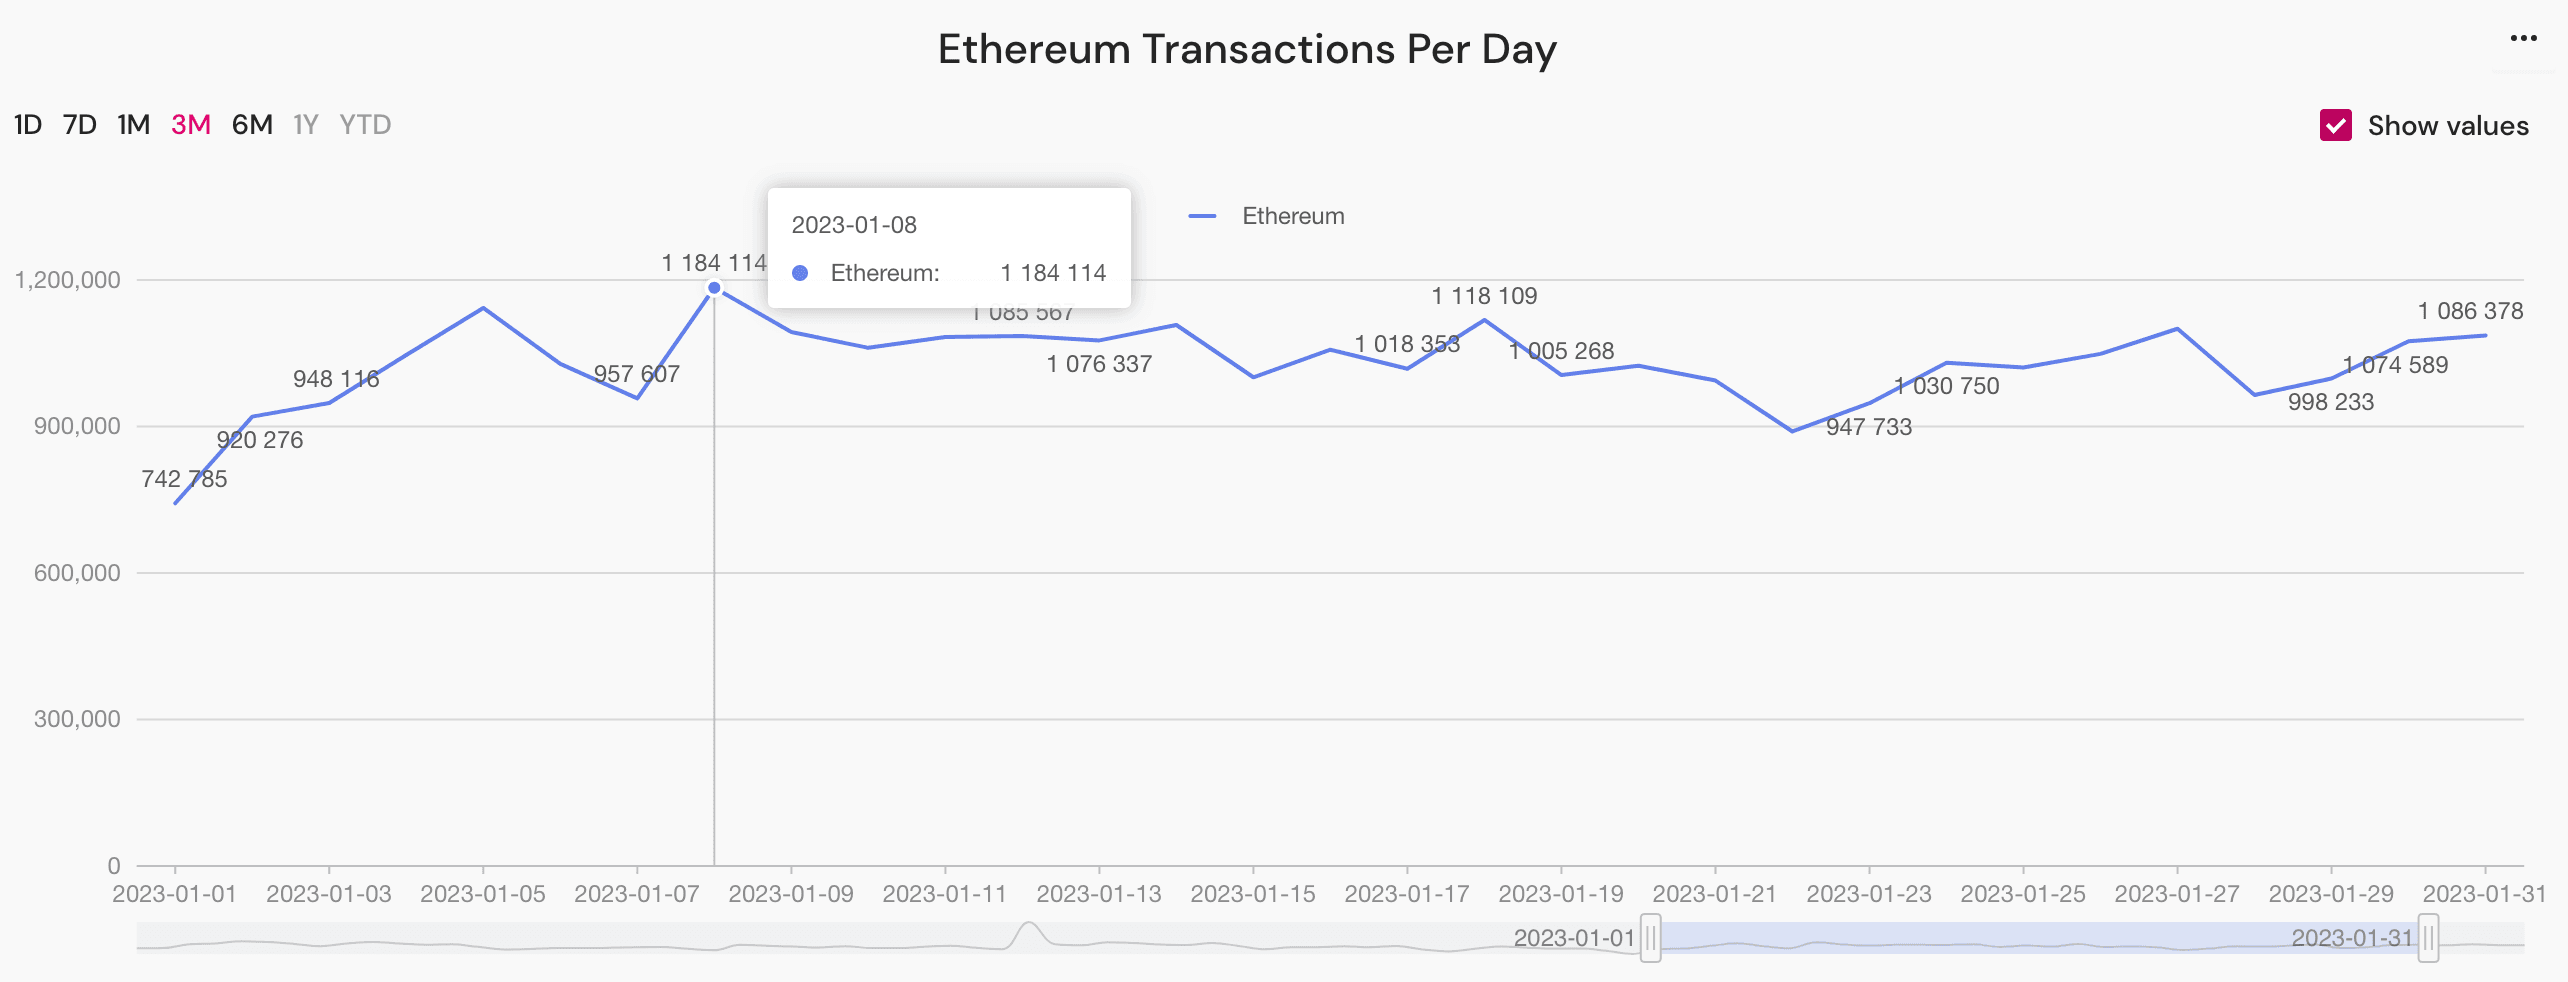 ethereum transactions peak, January 2023